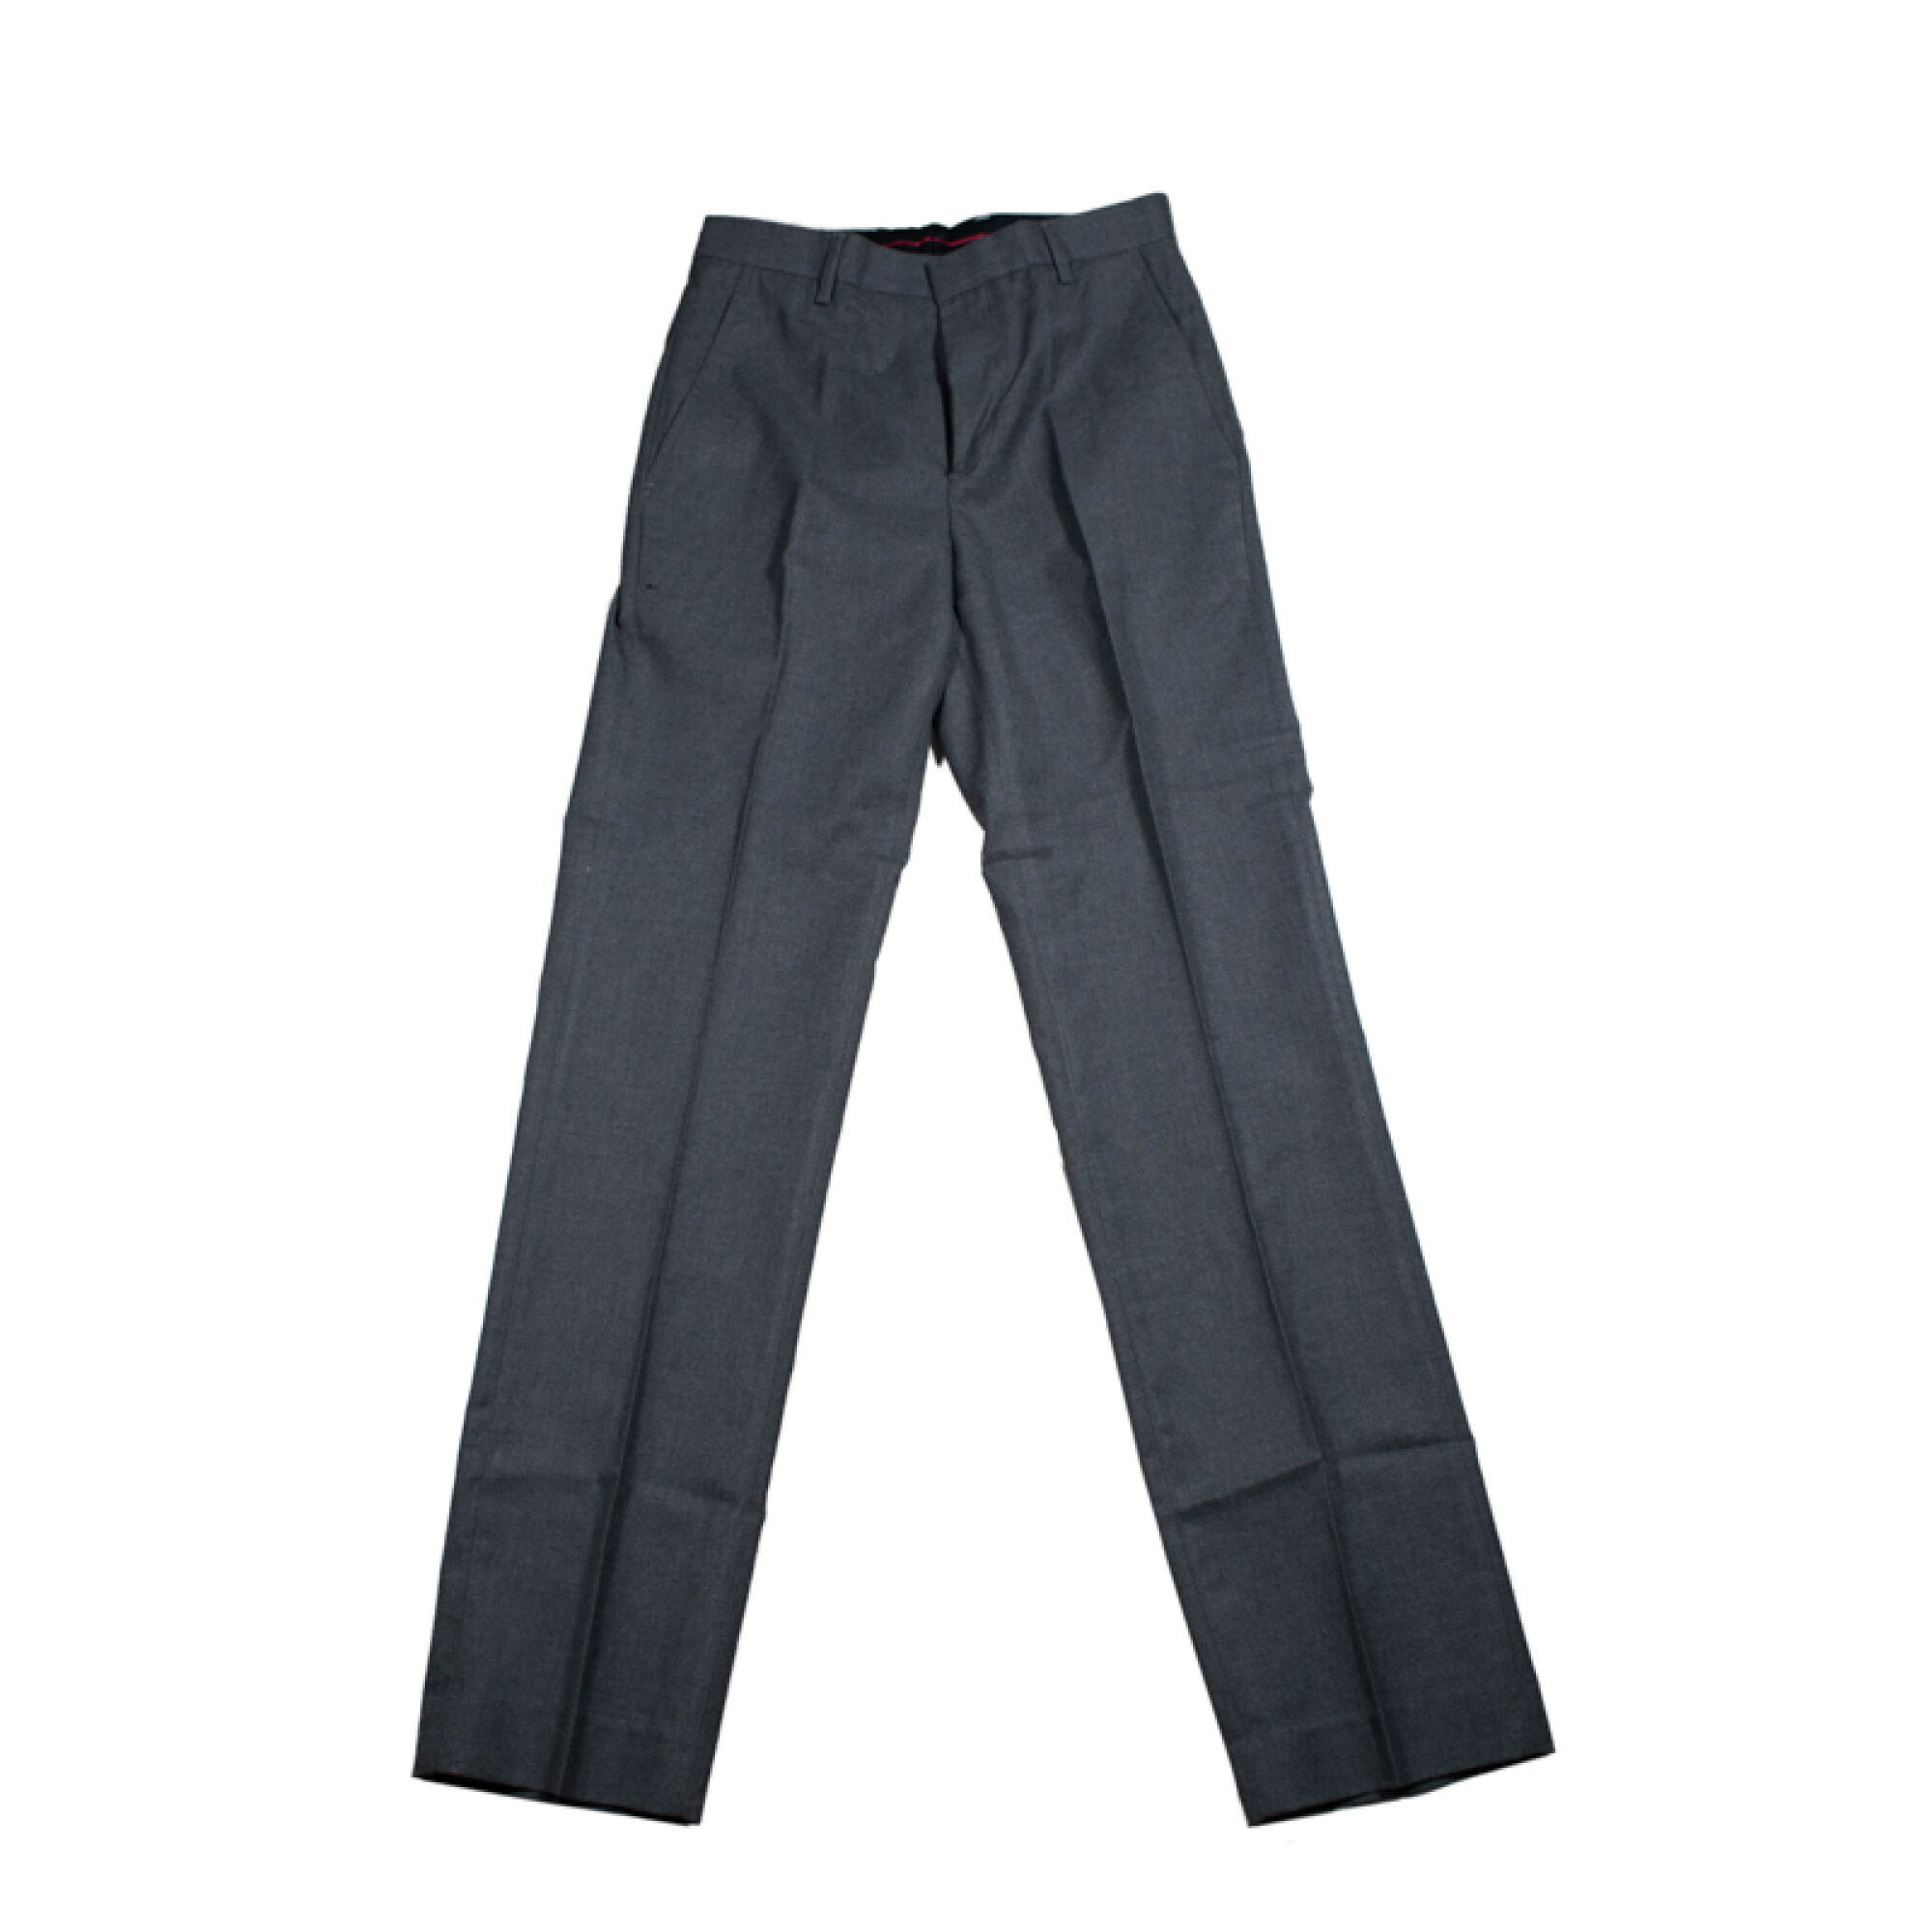 Pantalón formal gris claro — Chiarino Uniformes